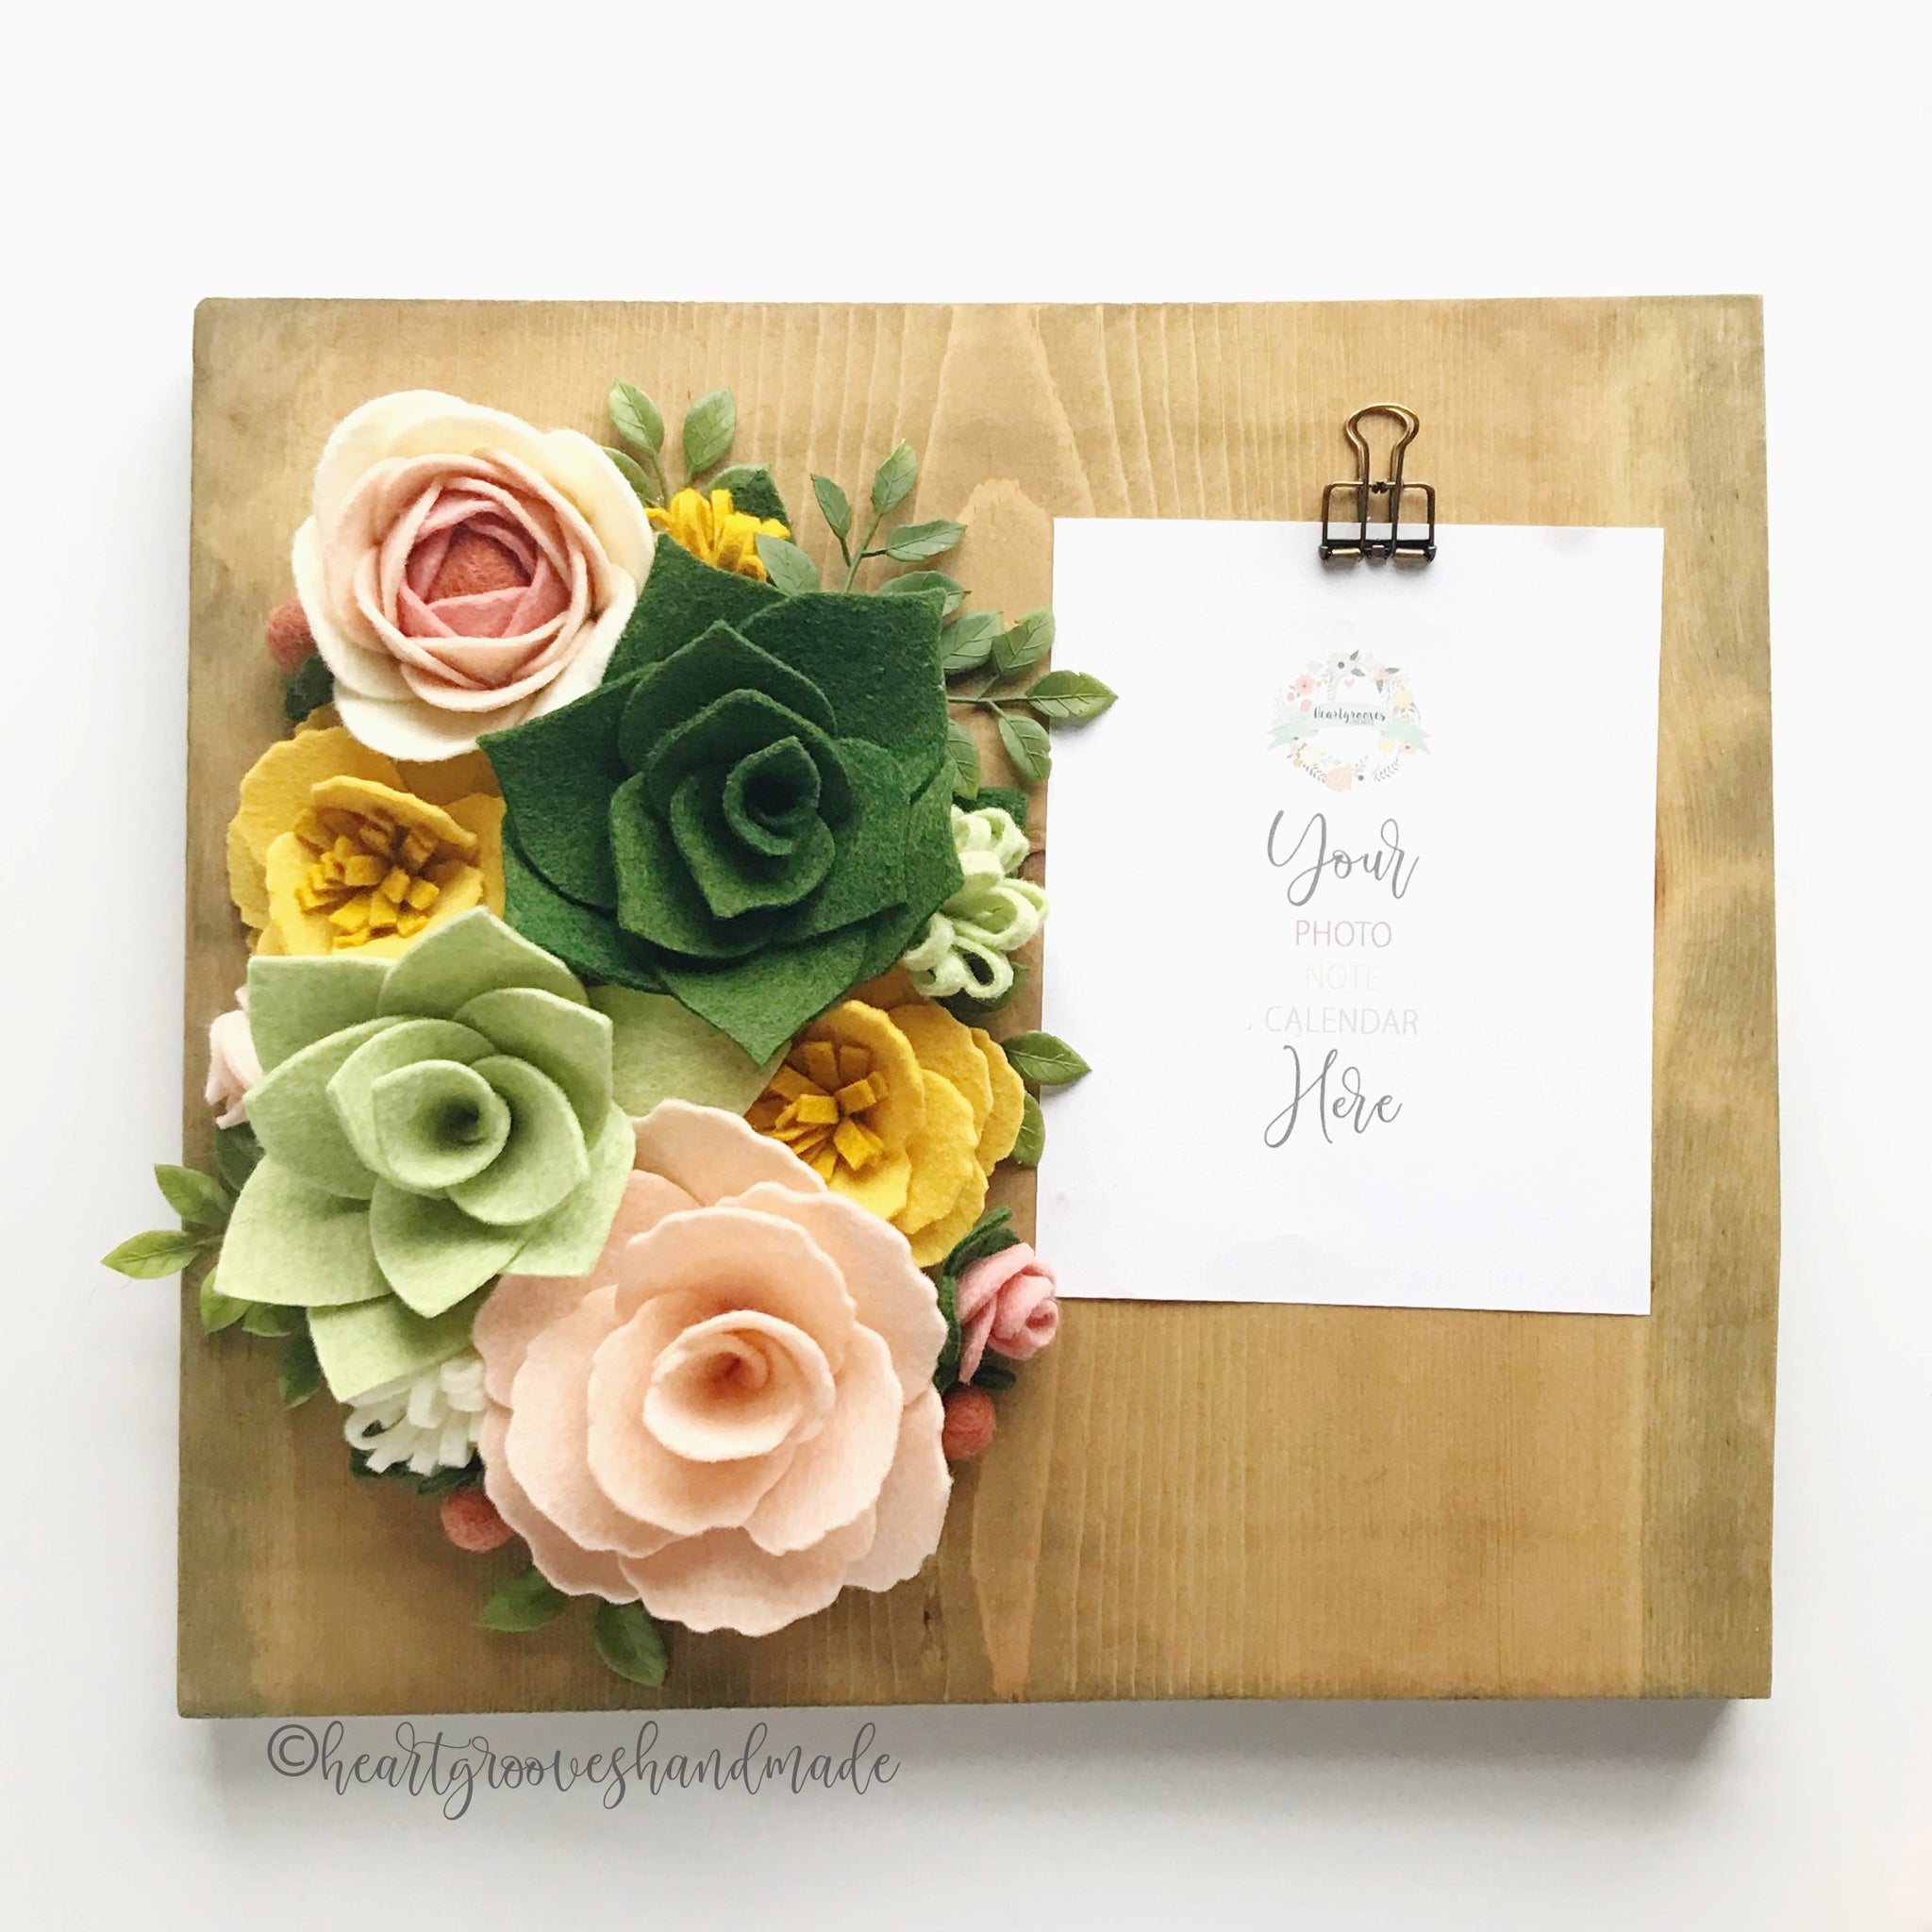 Felt Flower Craft Kit | Blush Forest